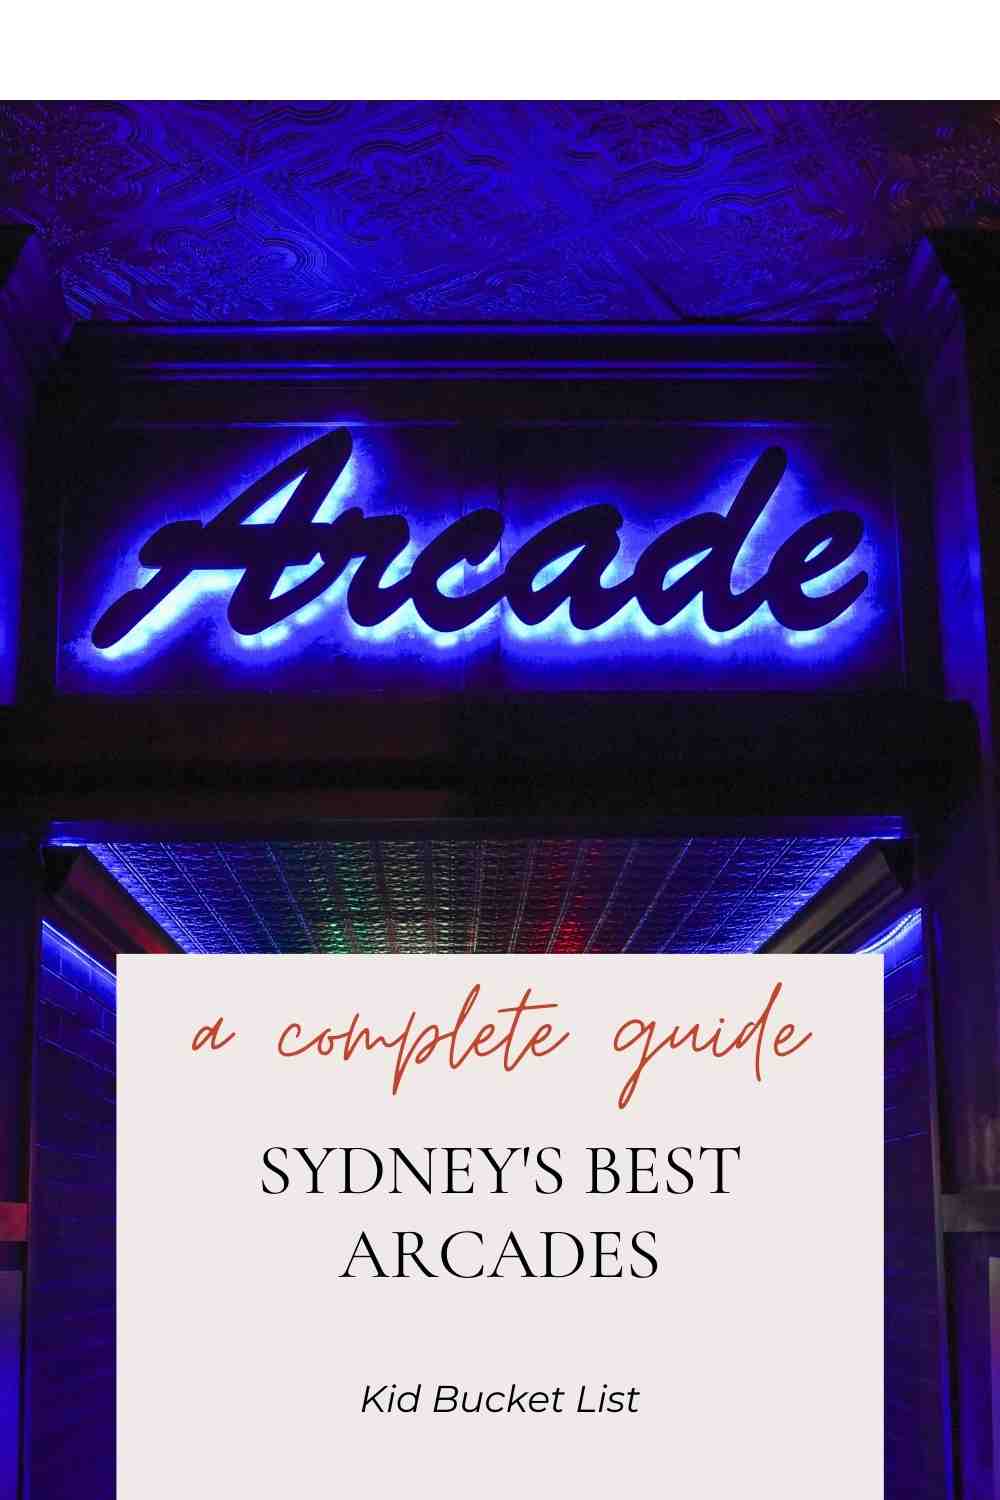 Sydney's Best Arcades Pinned